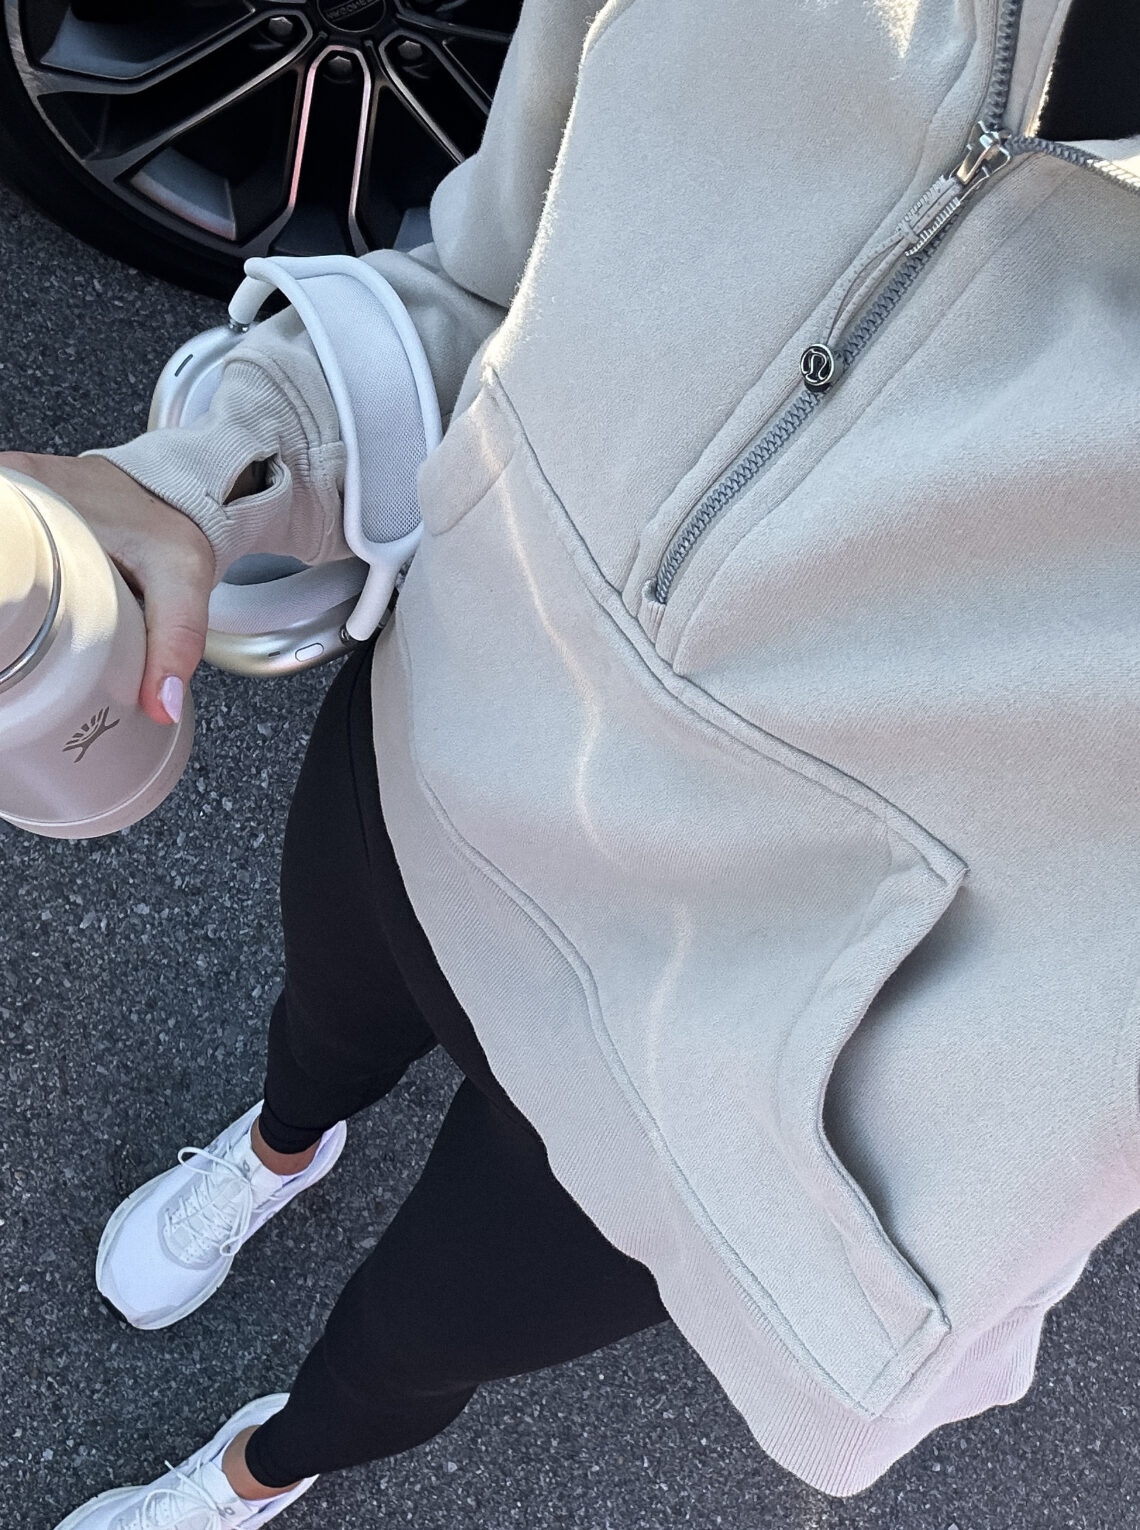 Fashion Jackson Wearing lululemon Scuba Hoodie beige Black Leggings On Running Sneakers gym outfit